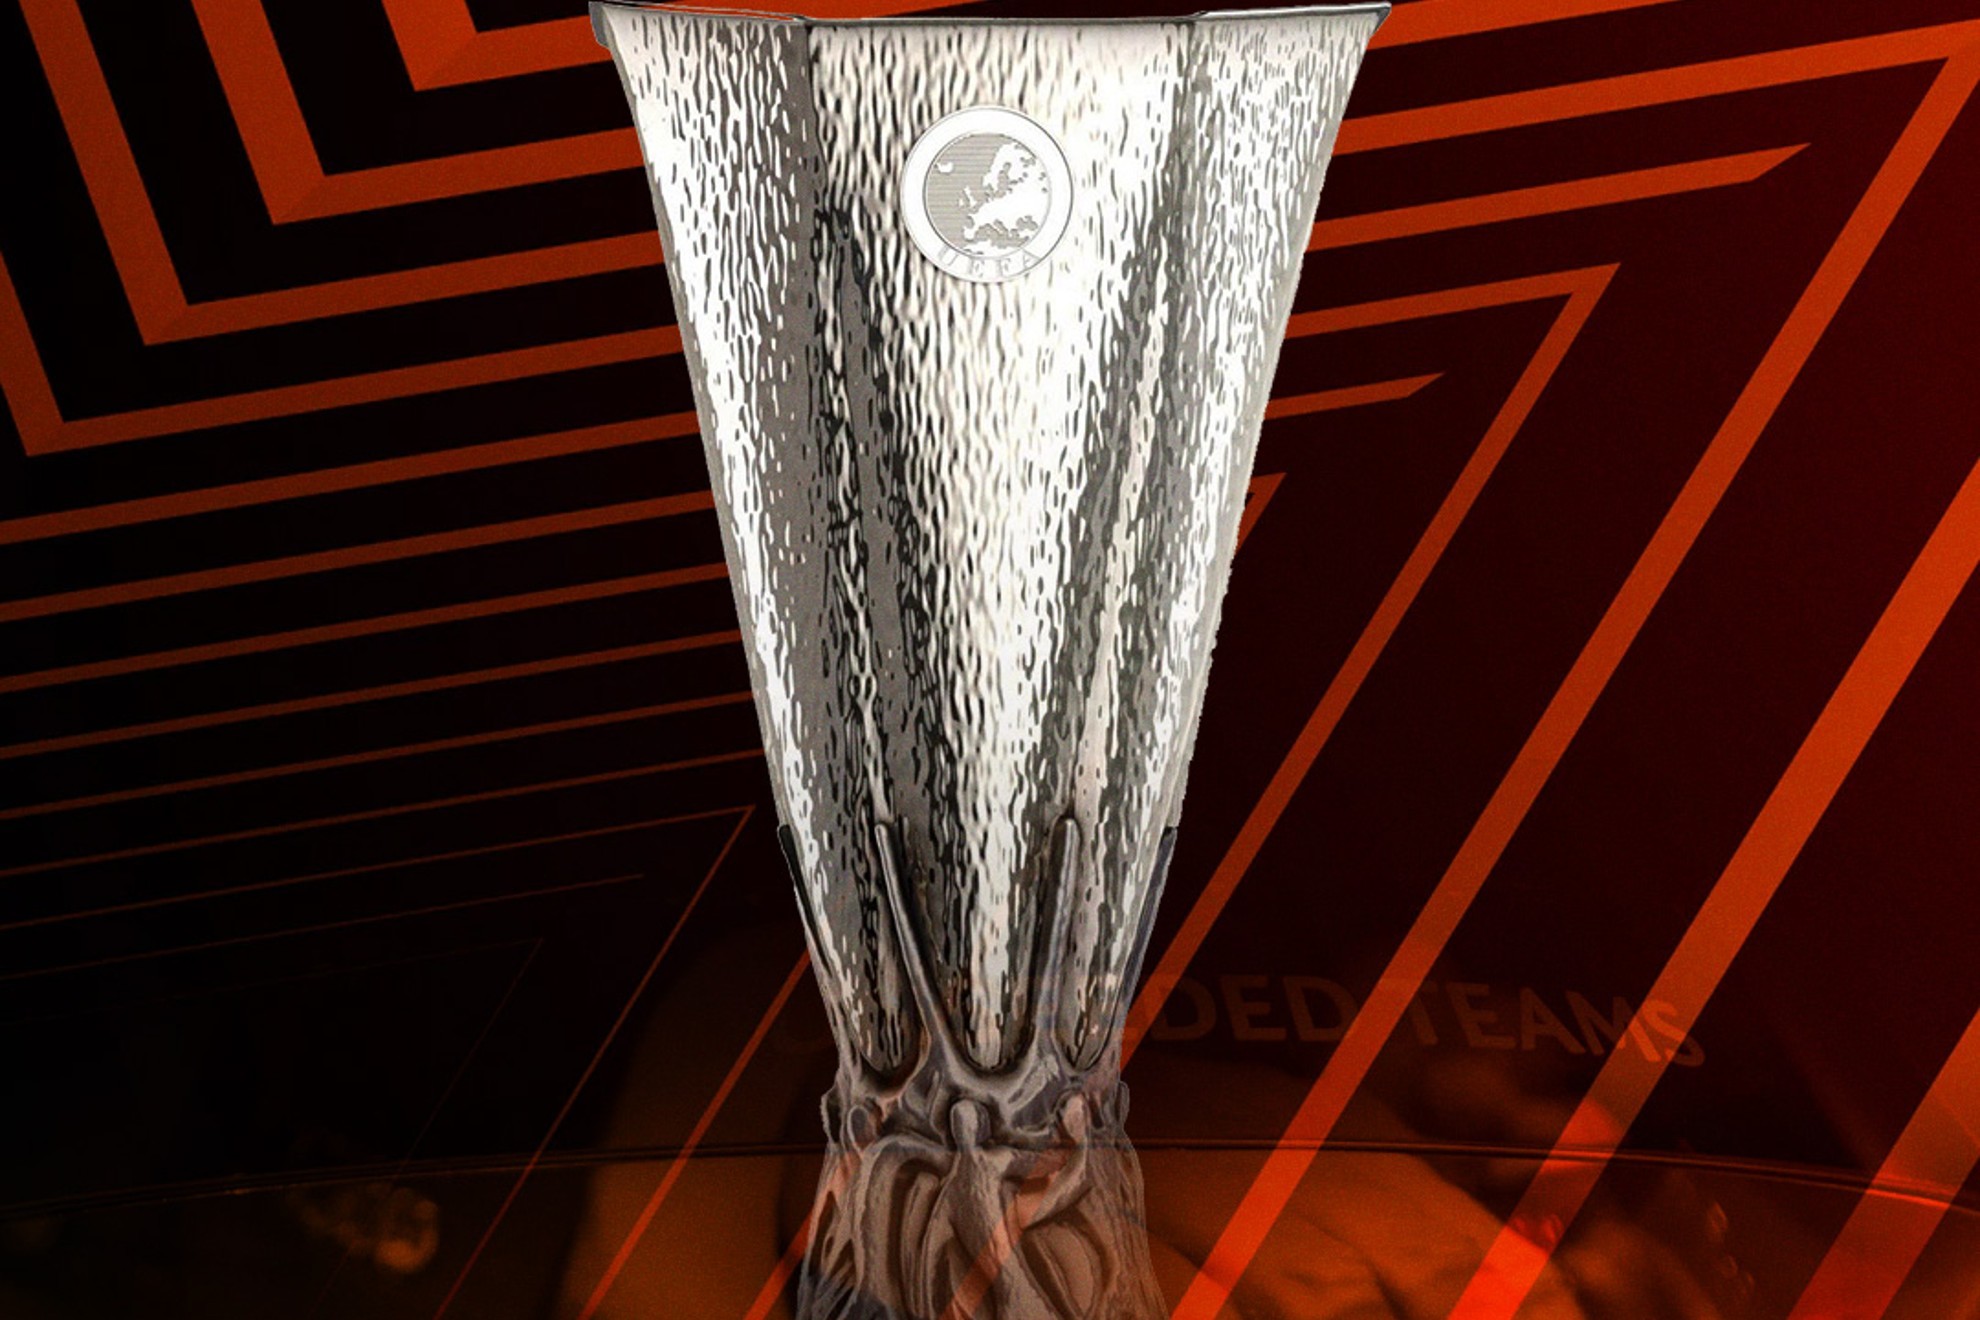 UEFA Europa League round of 16 draw: Liverpool to play Sparta Prague and Leverkusen gets Qarabag